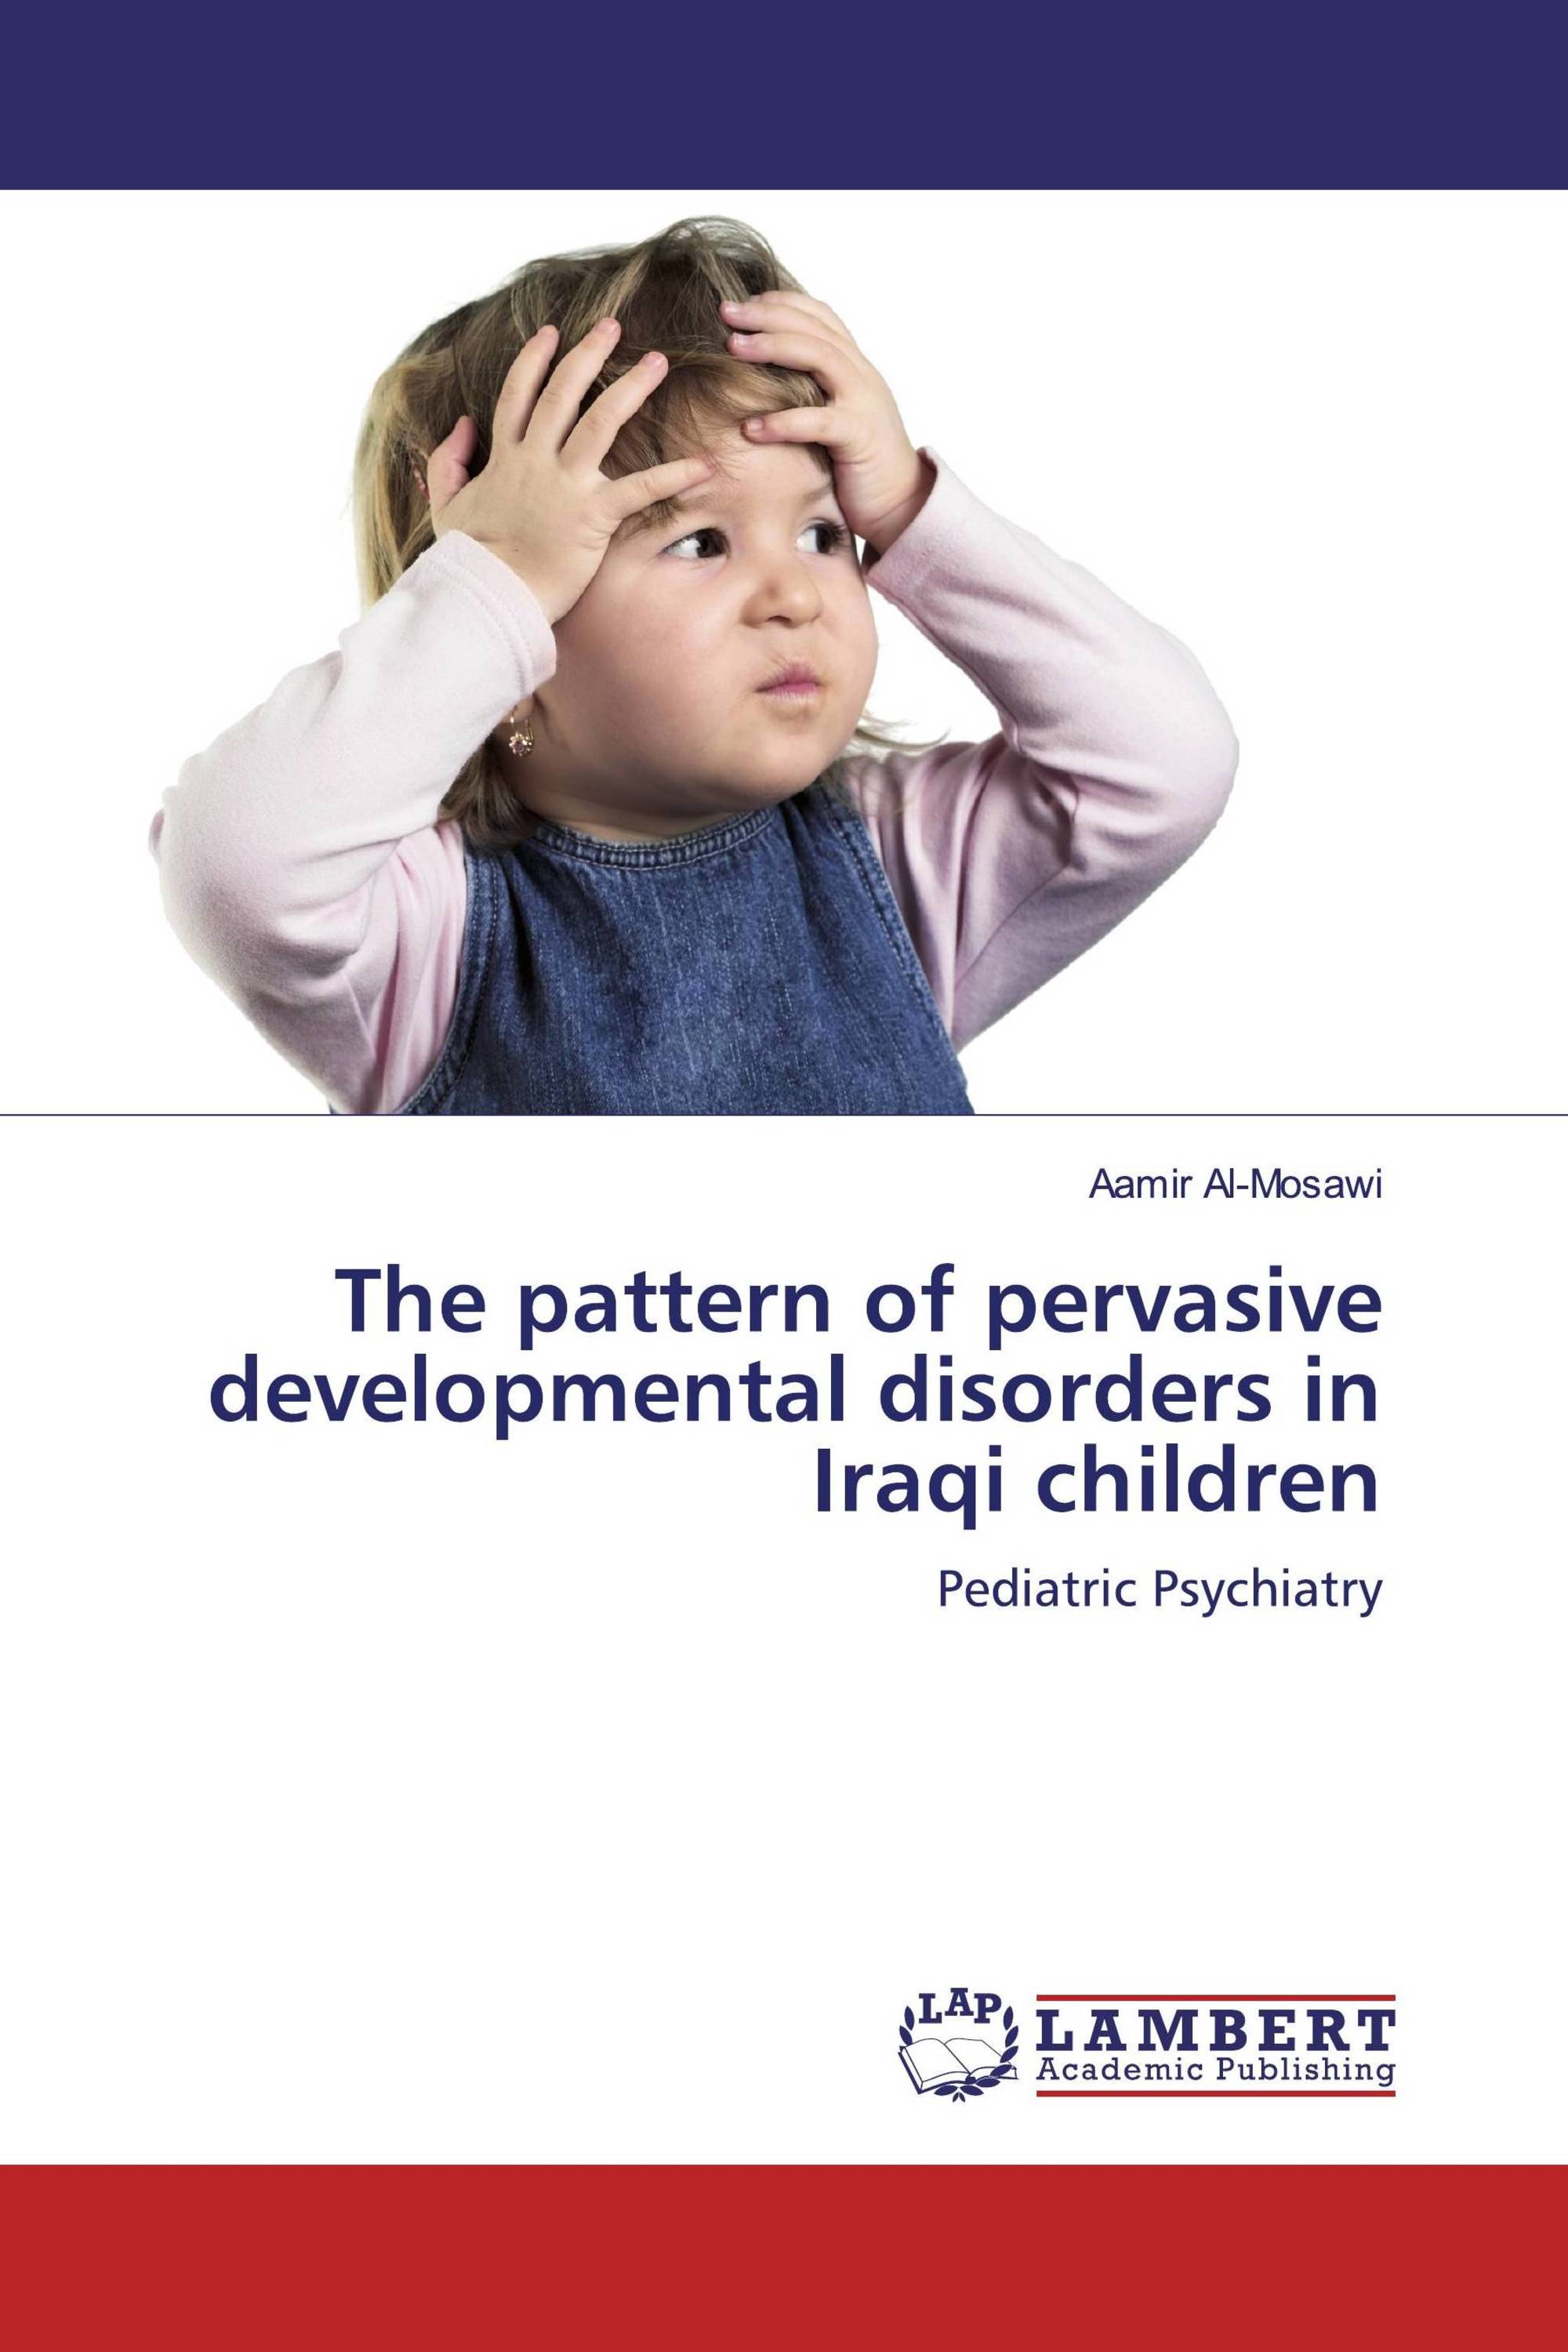 The pattern of pervasive developmental disorders in Iraqi children